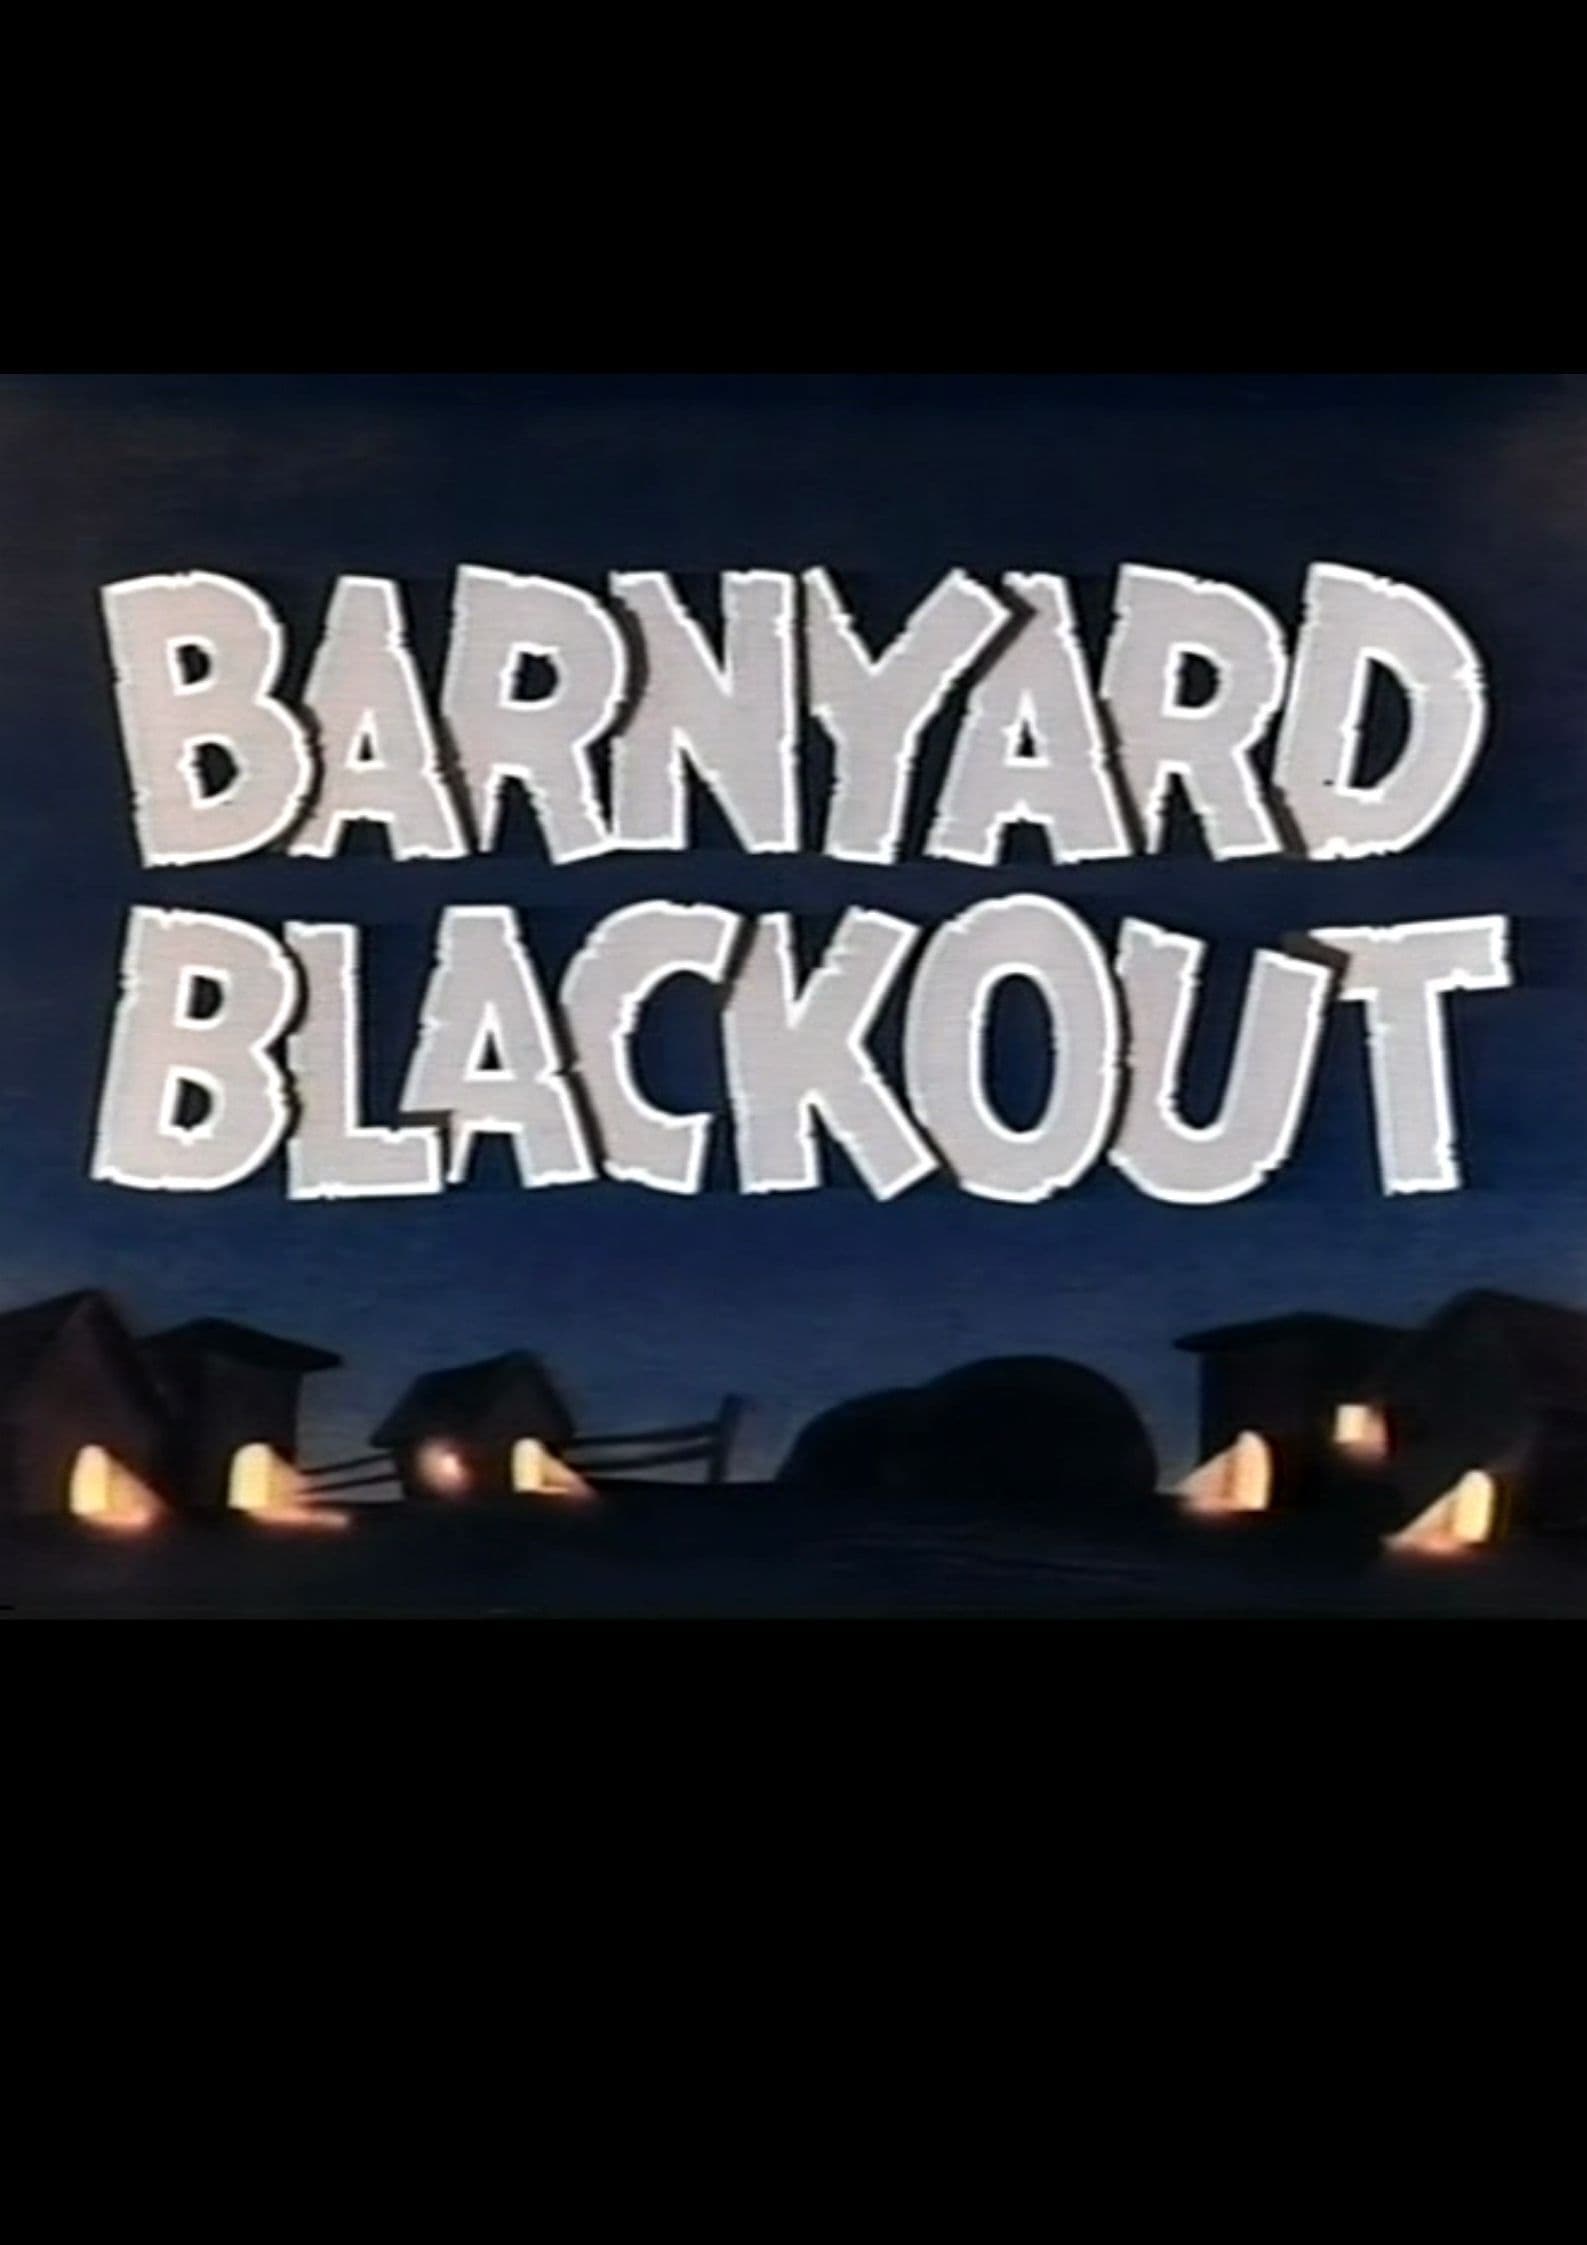 Barnyard Blackout